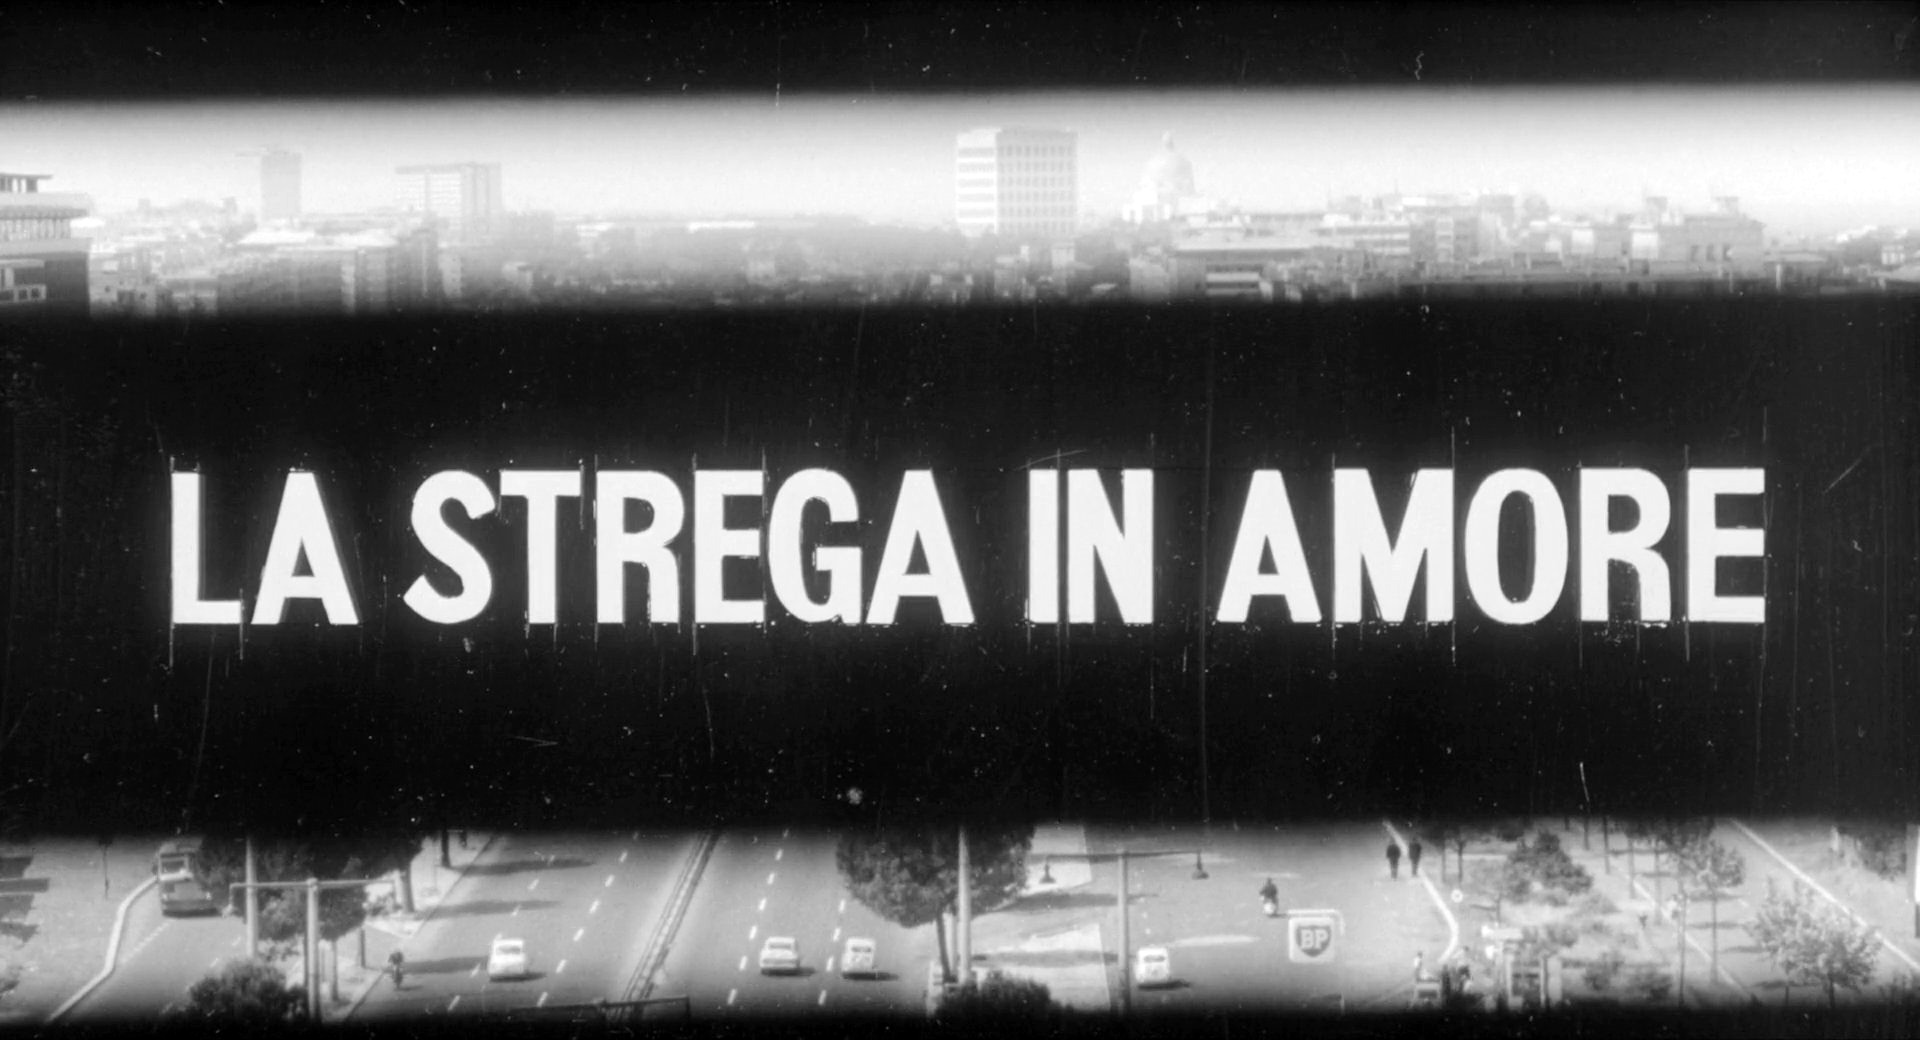 La strega in amore (1966) Title.jpg